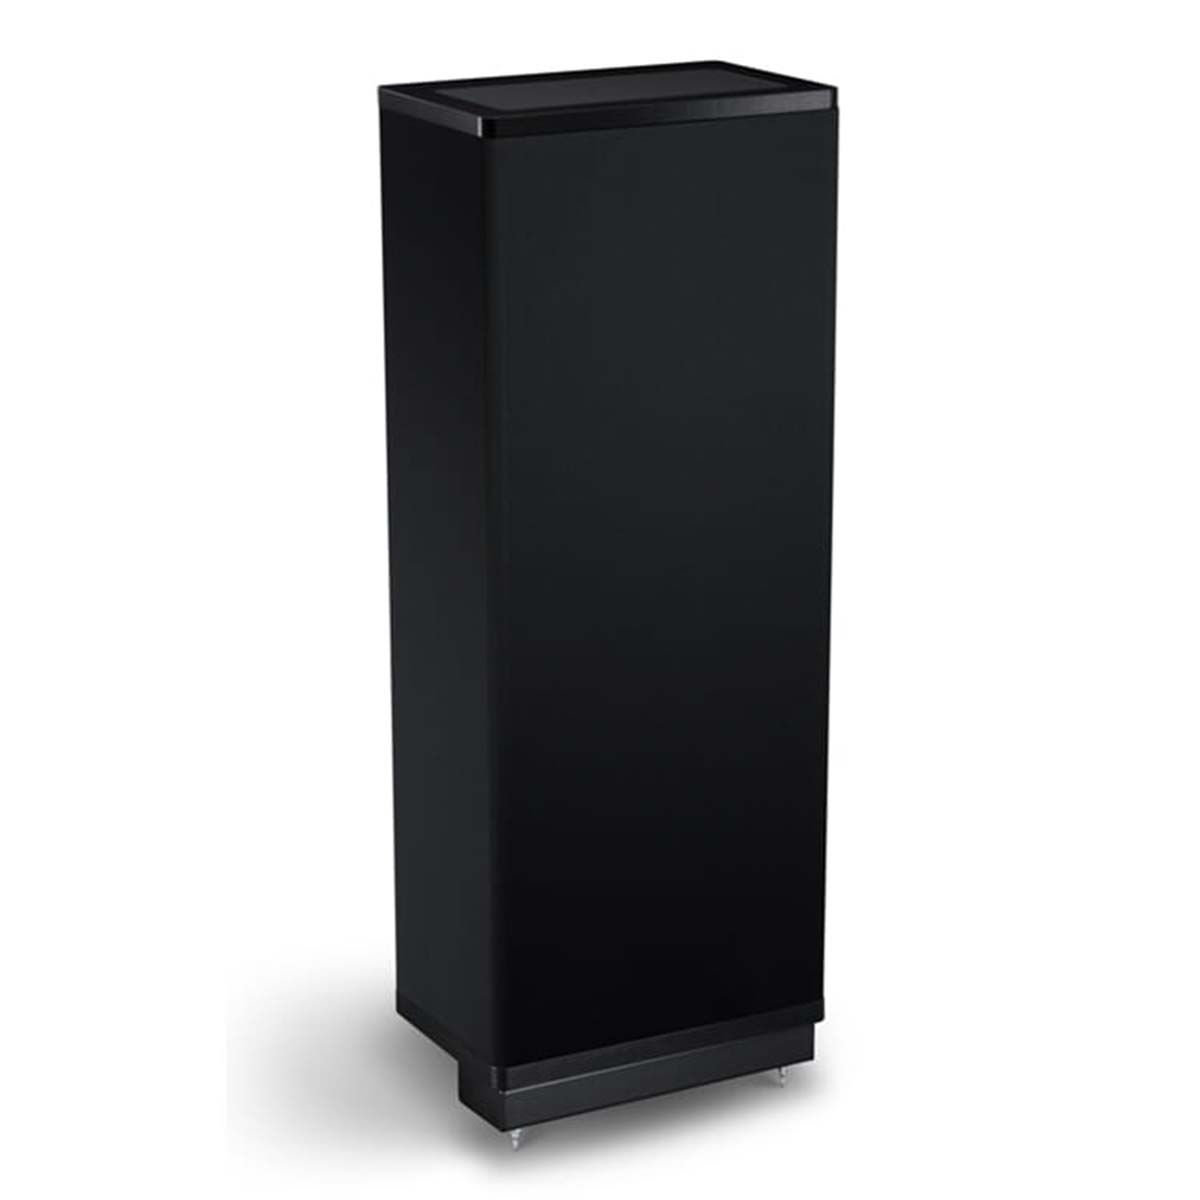 Vandersteen Model 1Ci+ Floorstanding Speakers, Black, single speaker front angle view